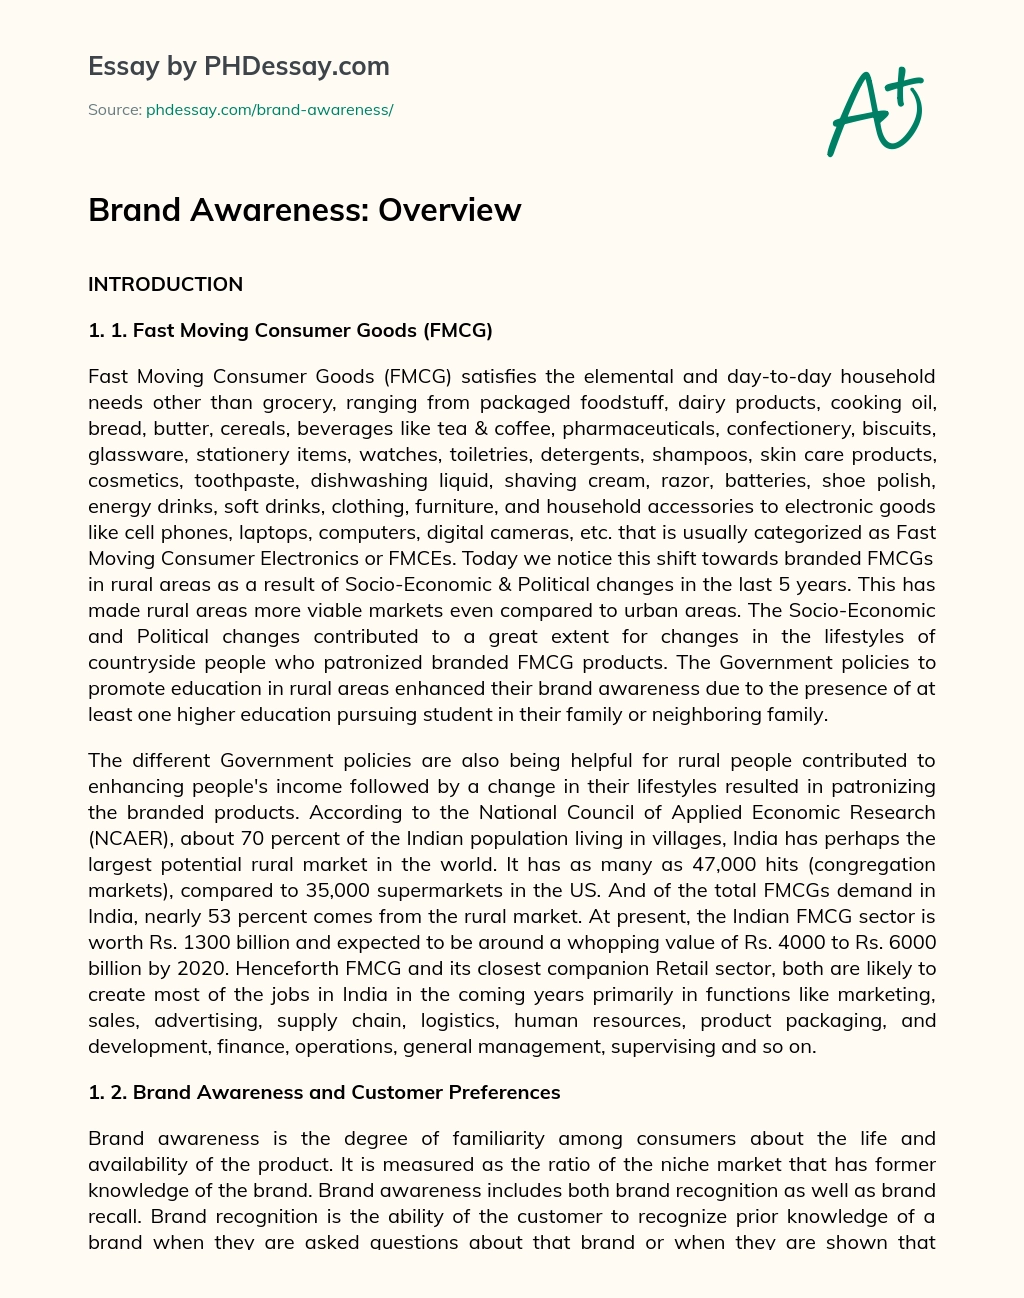 Brand Awareness: Overview essay